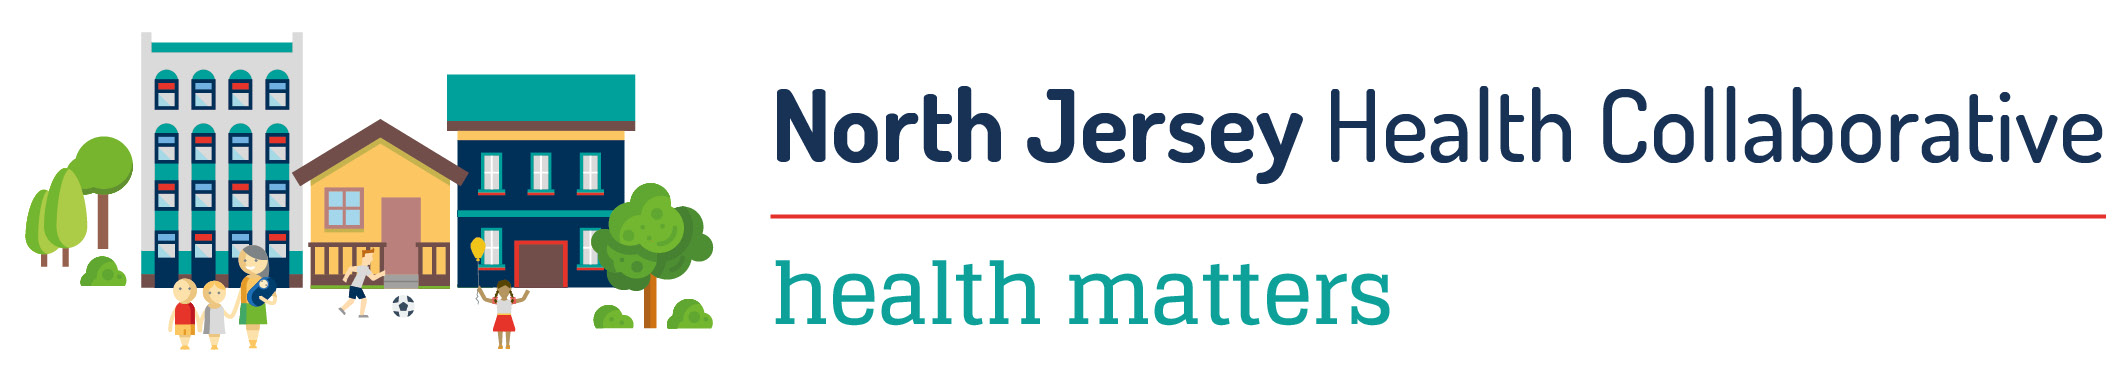 North Jersey Health Collaborative